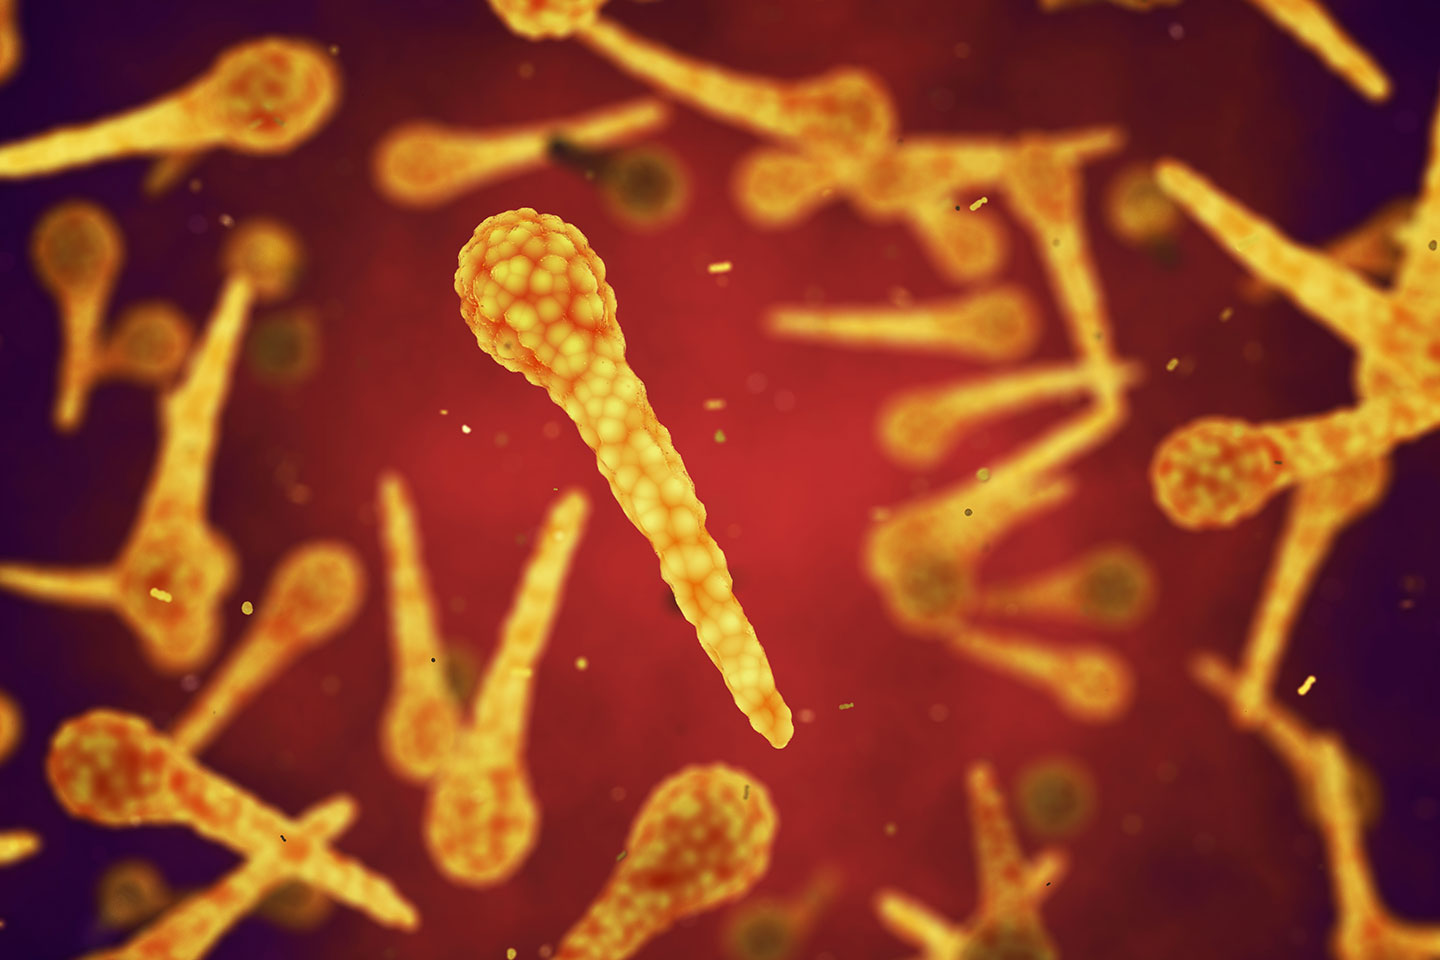 tetanus bacteria images